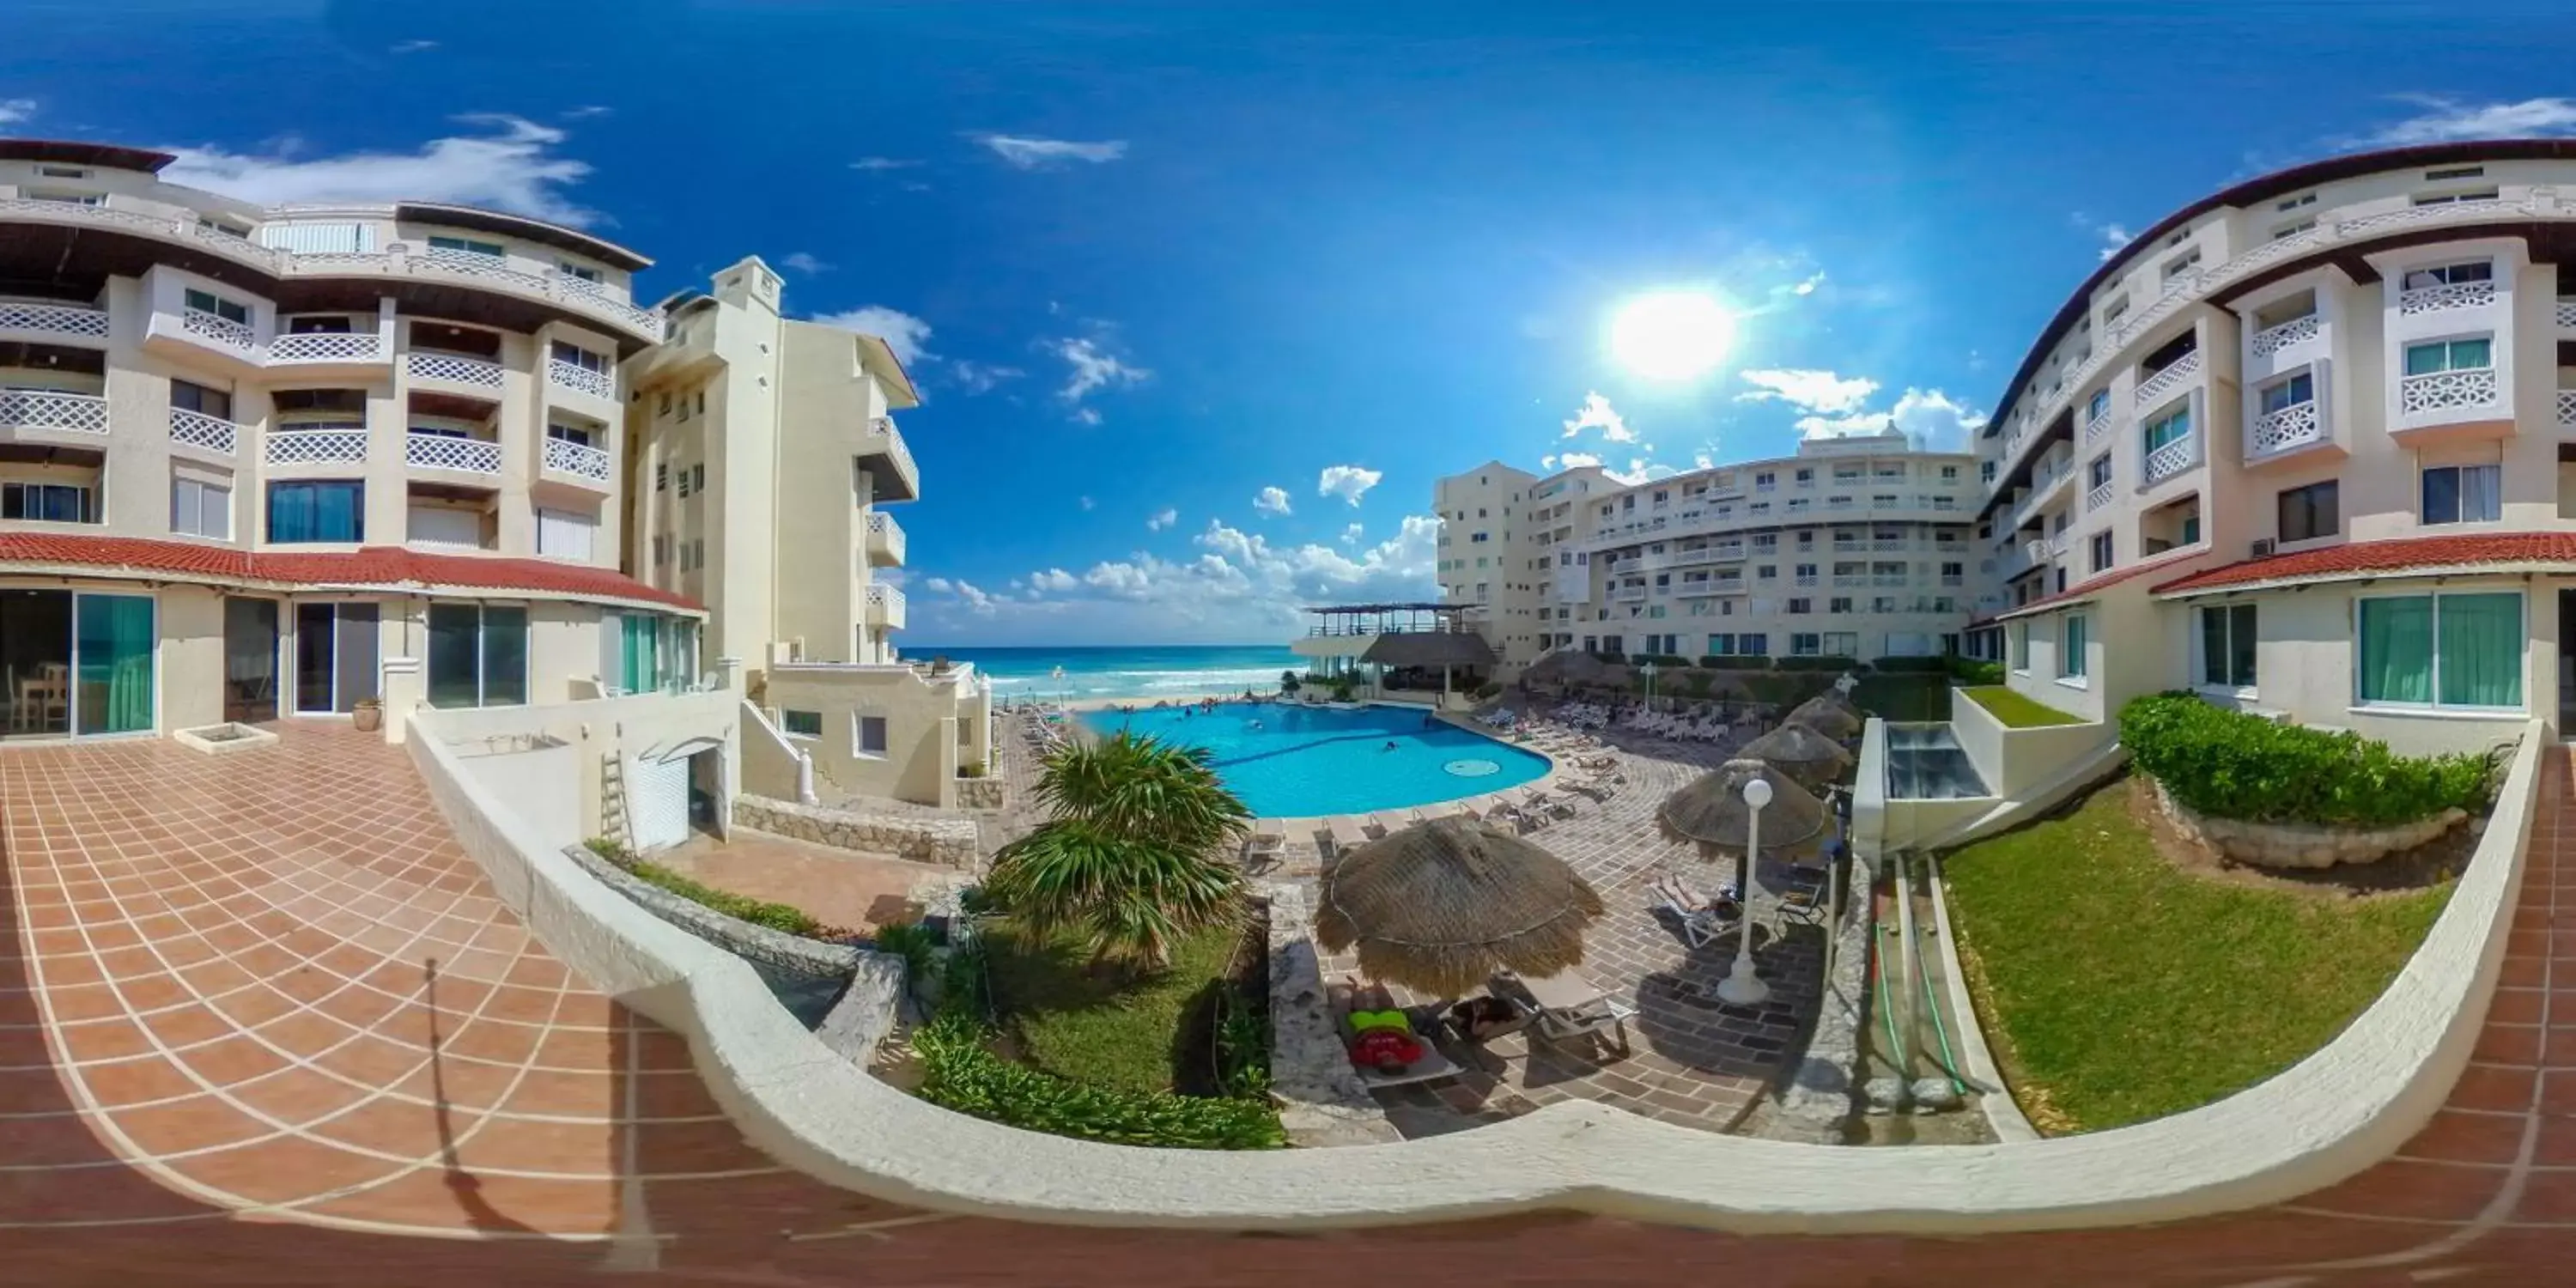 Bird's eye view, Pool View in BSEA Cancun Plaza Hotel